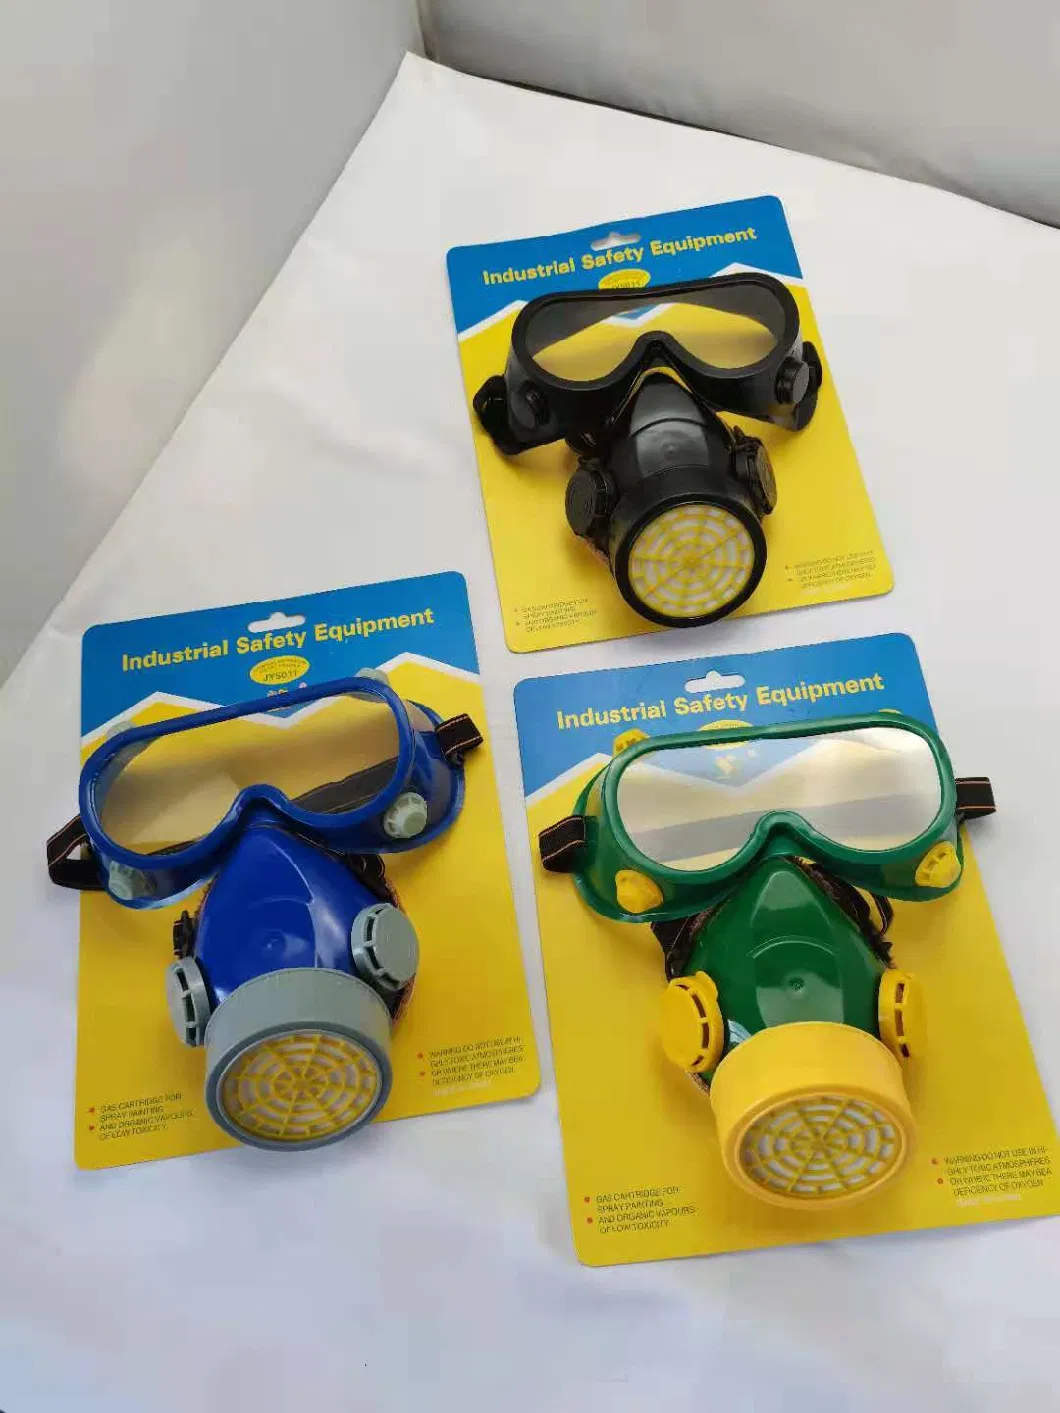 Respiratory Protection Full Mask 6800 Gas Mask Respirator